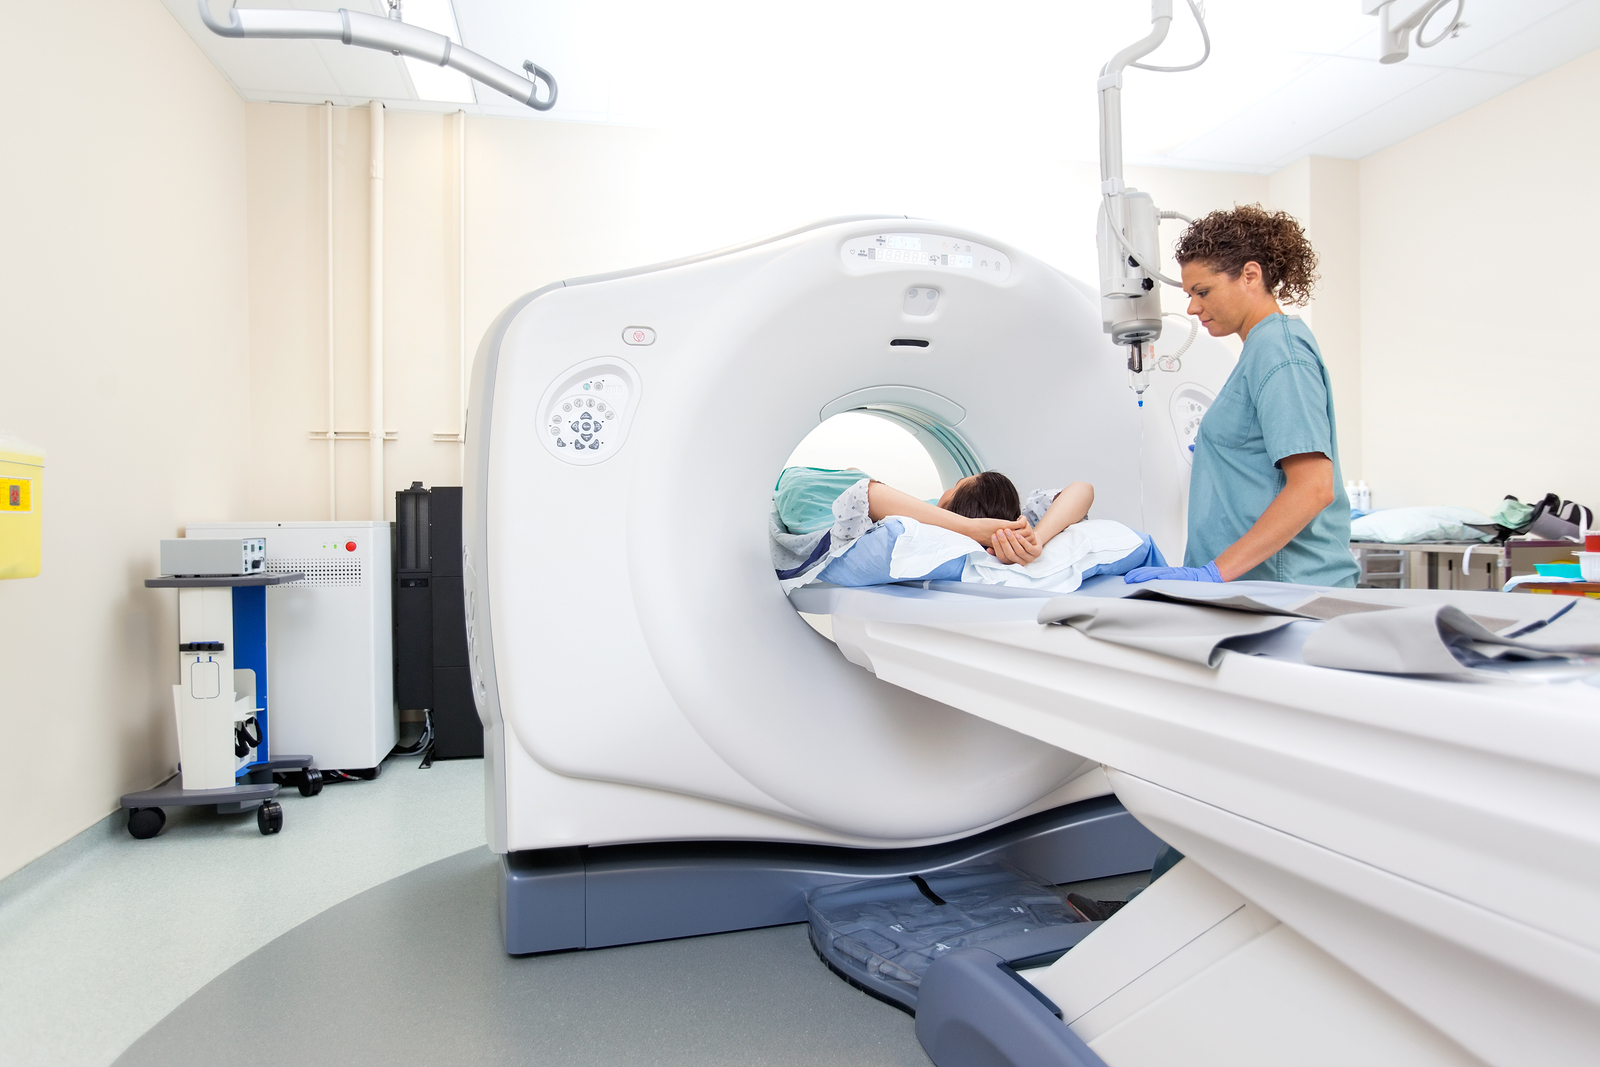 PET CT scan in Bangalore